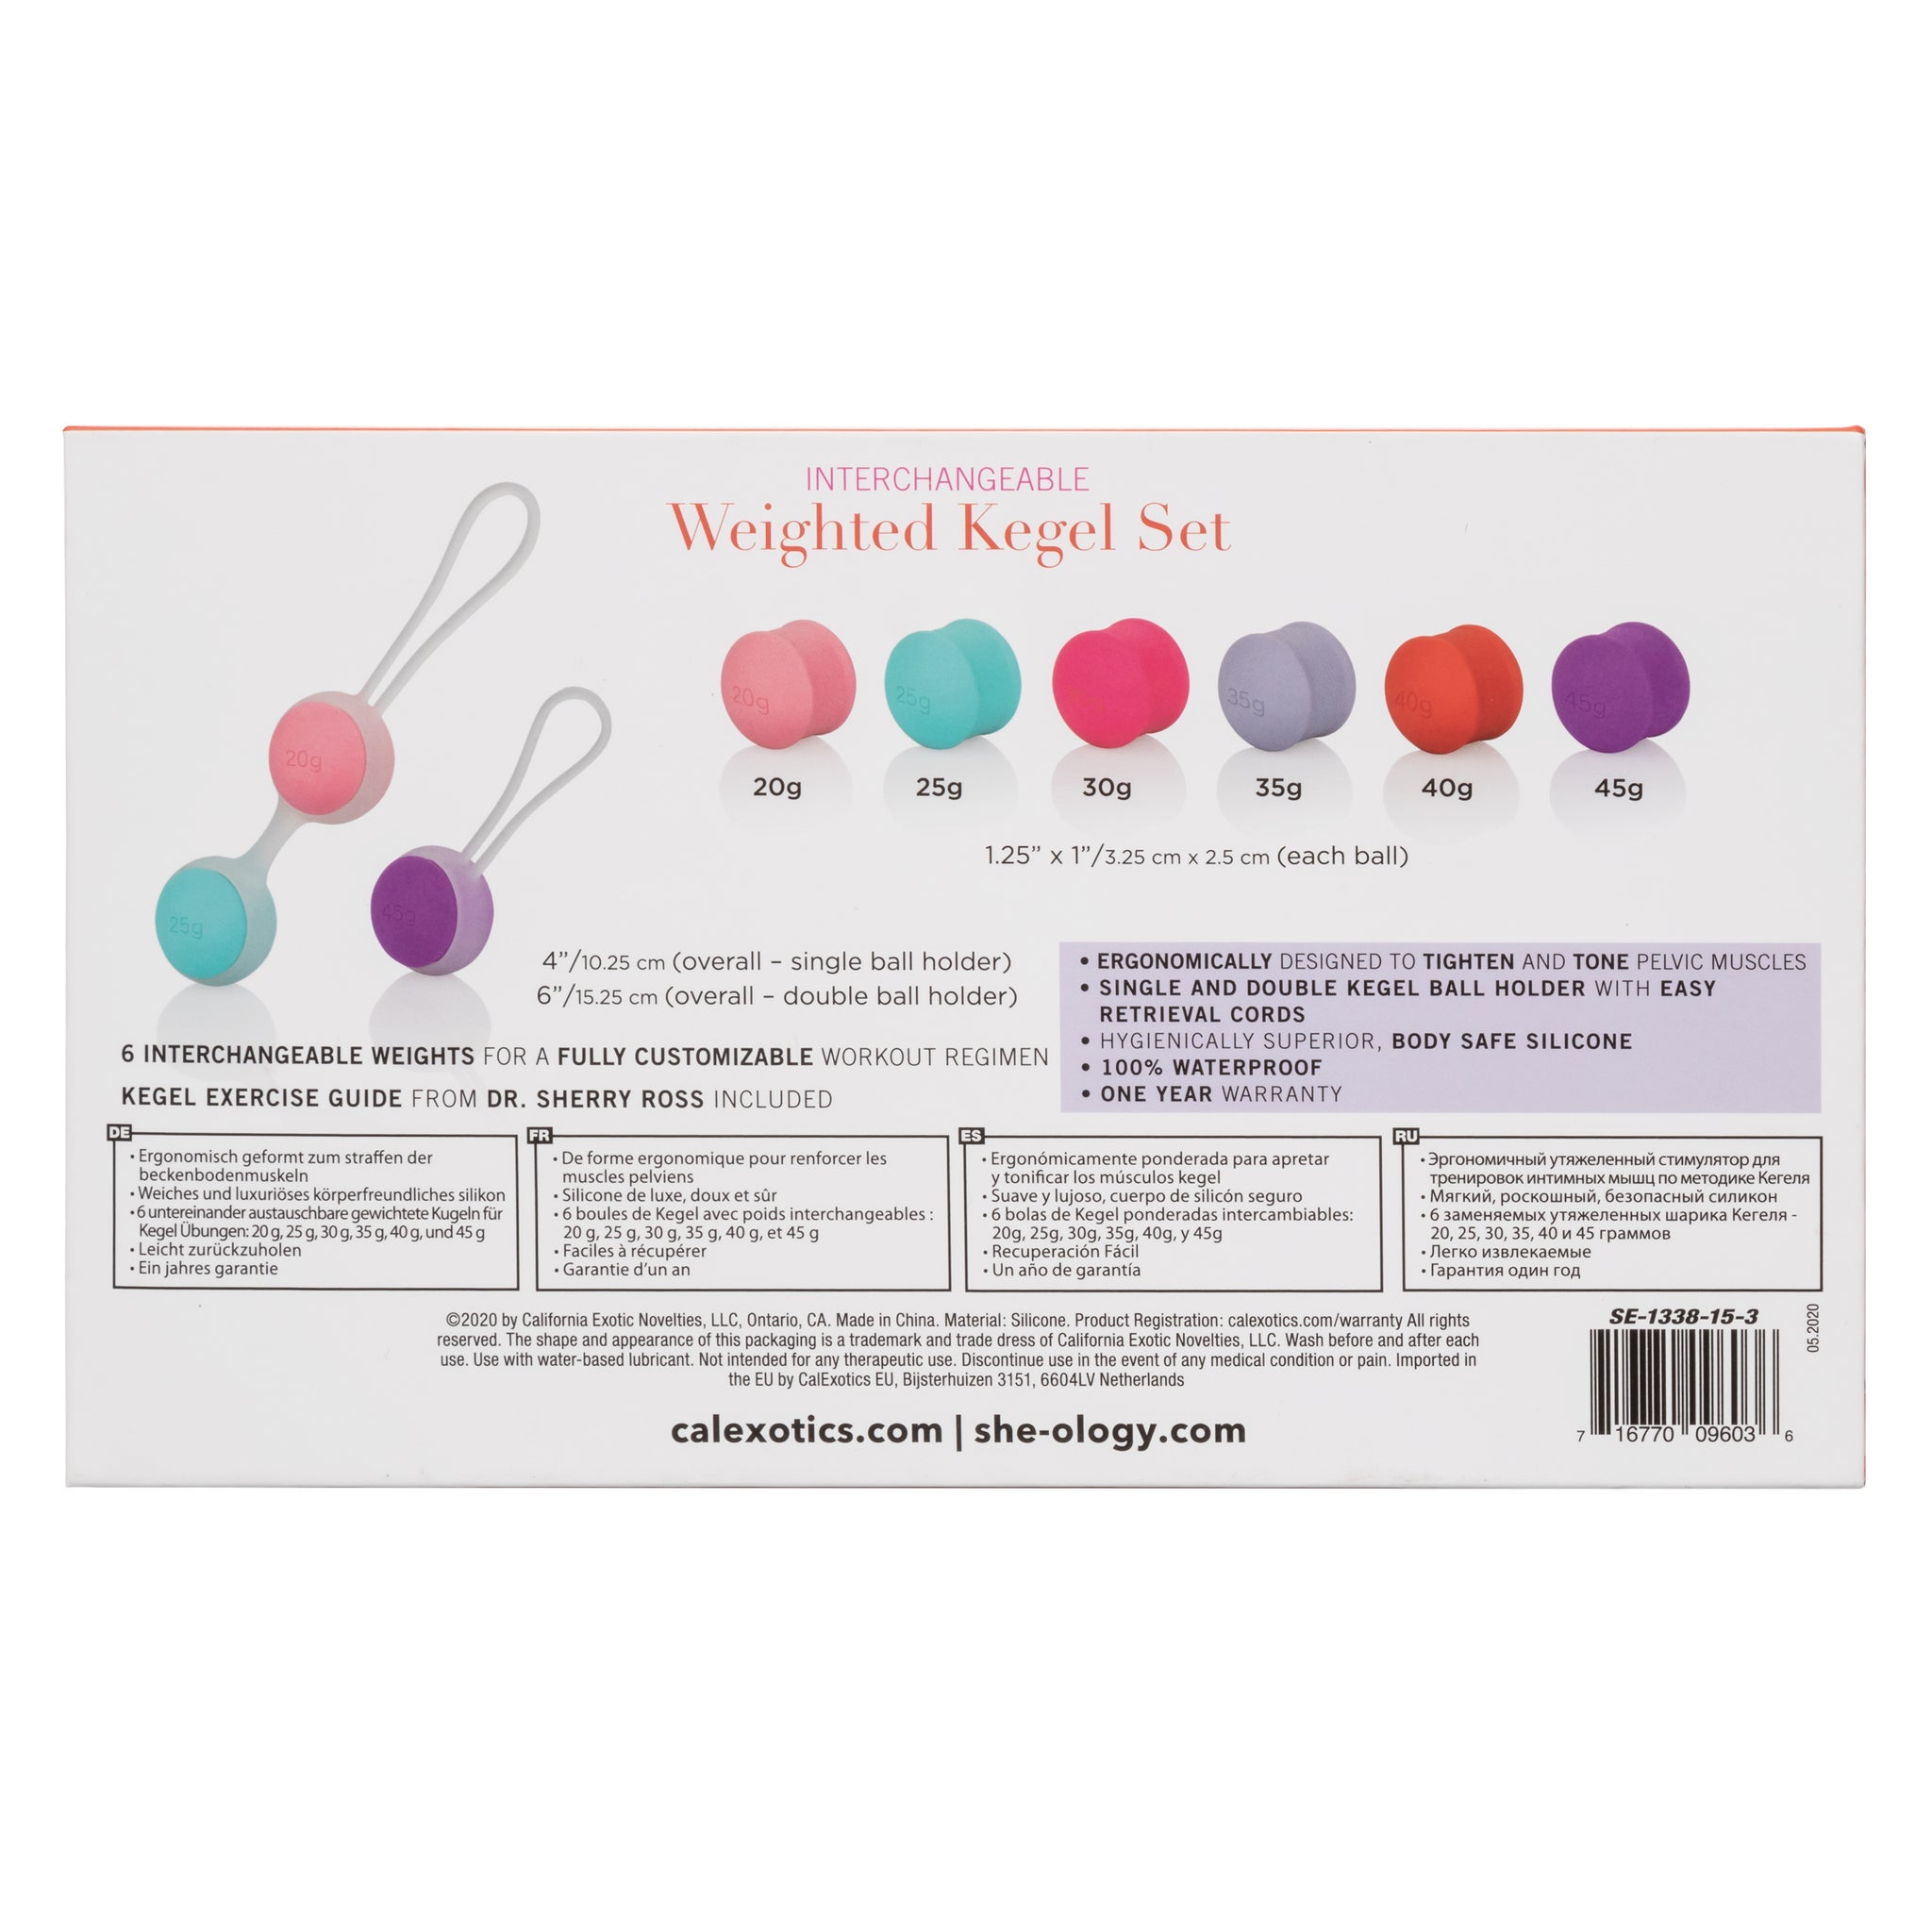 she-ology – Kegel Products Set she-ology Interchangeable Sexual Wellness